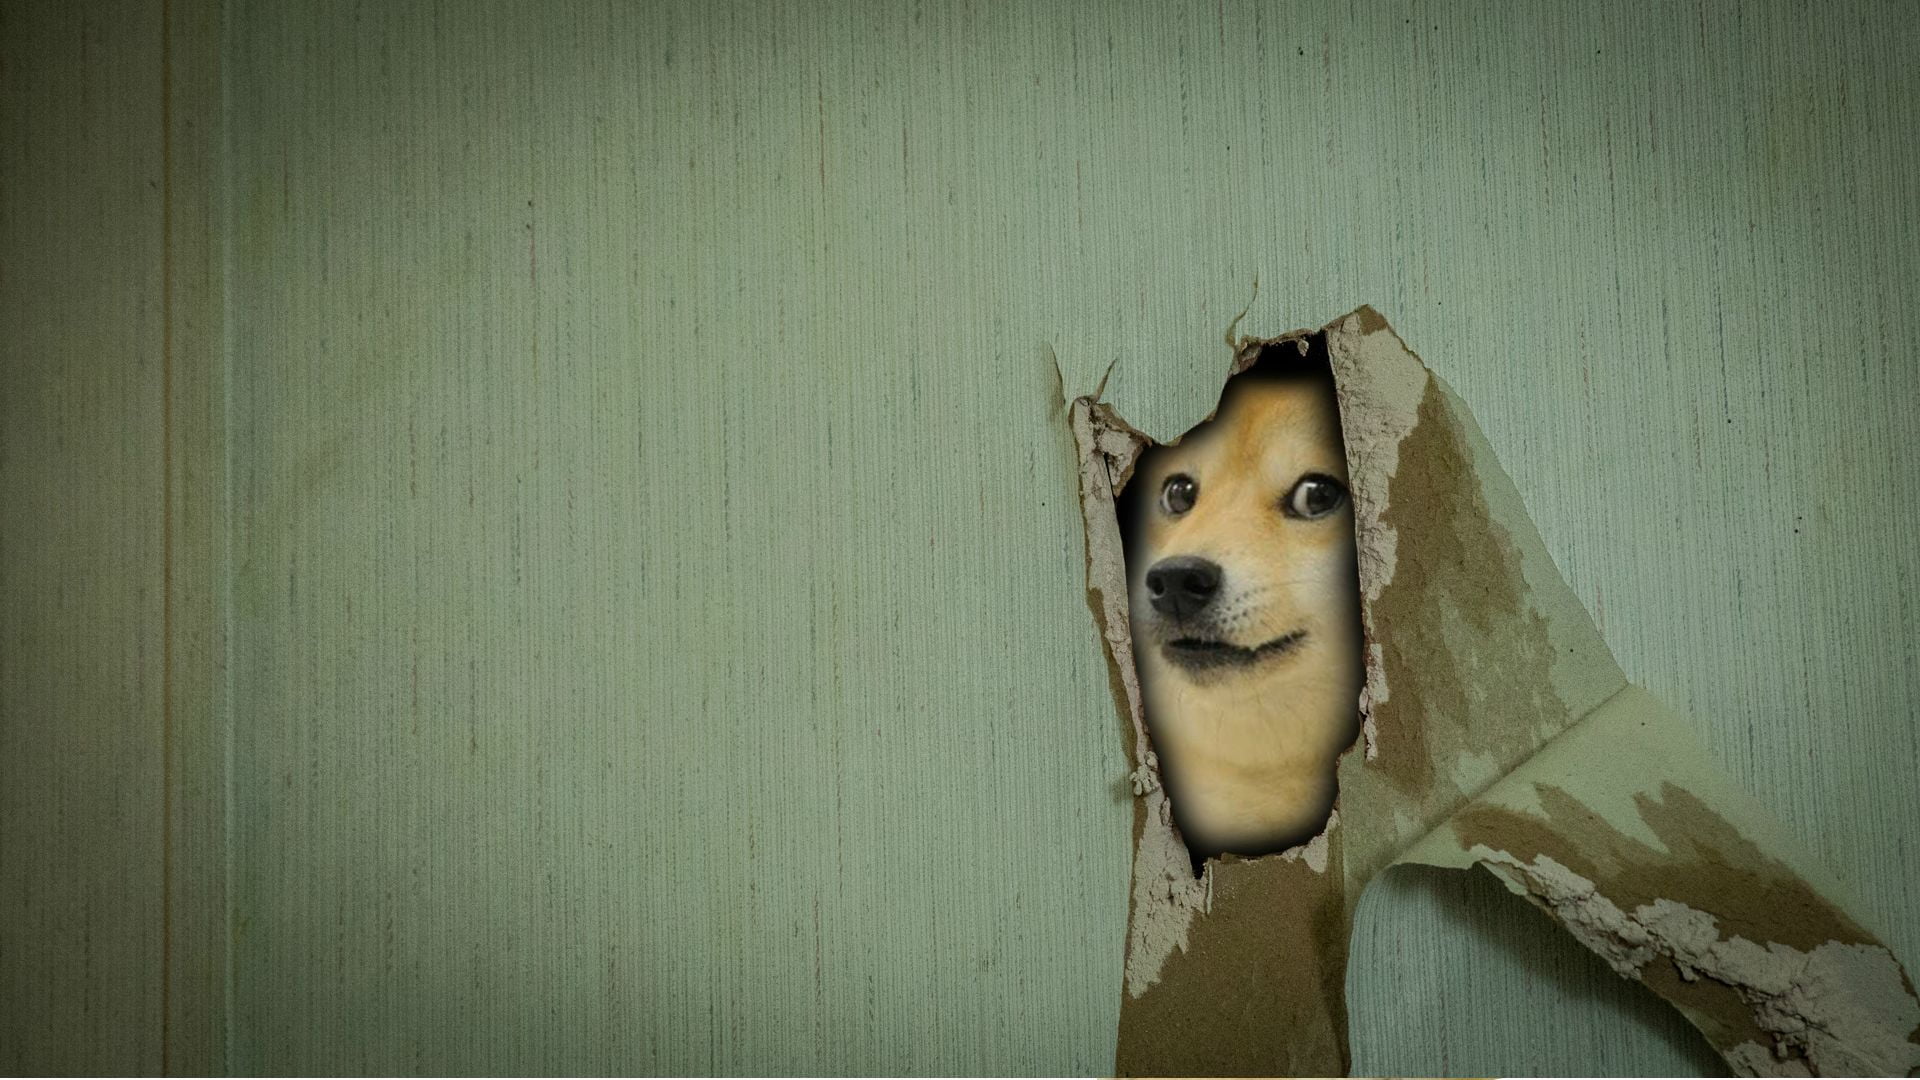 doge digital wallpaper, memes, one animal, domestic, pets, canine